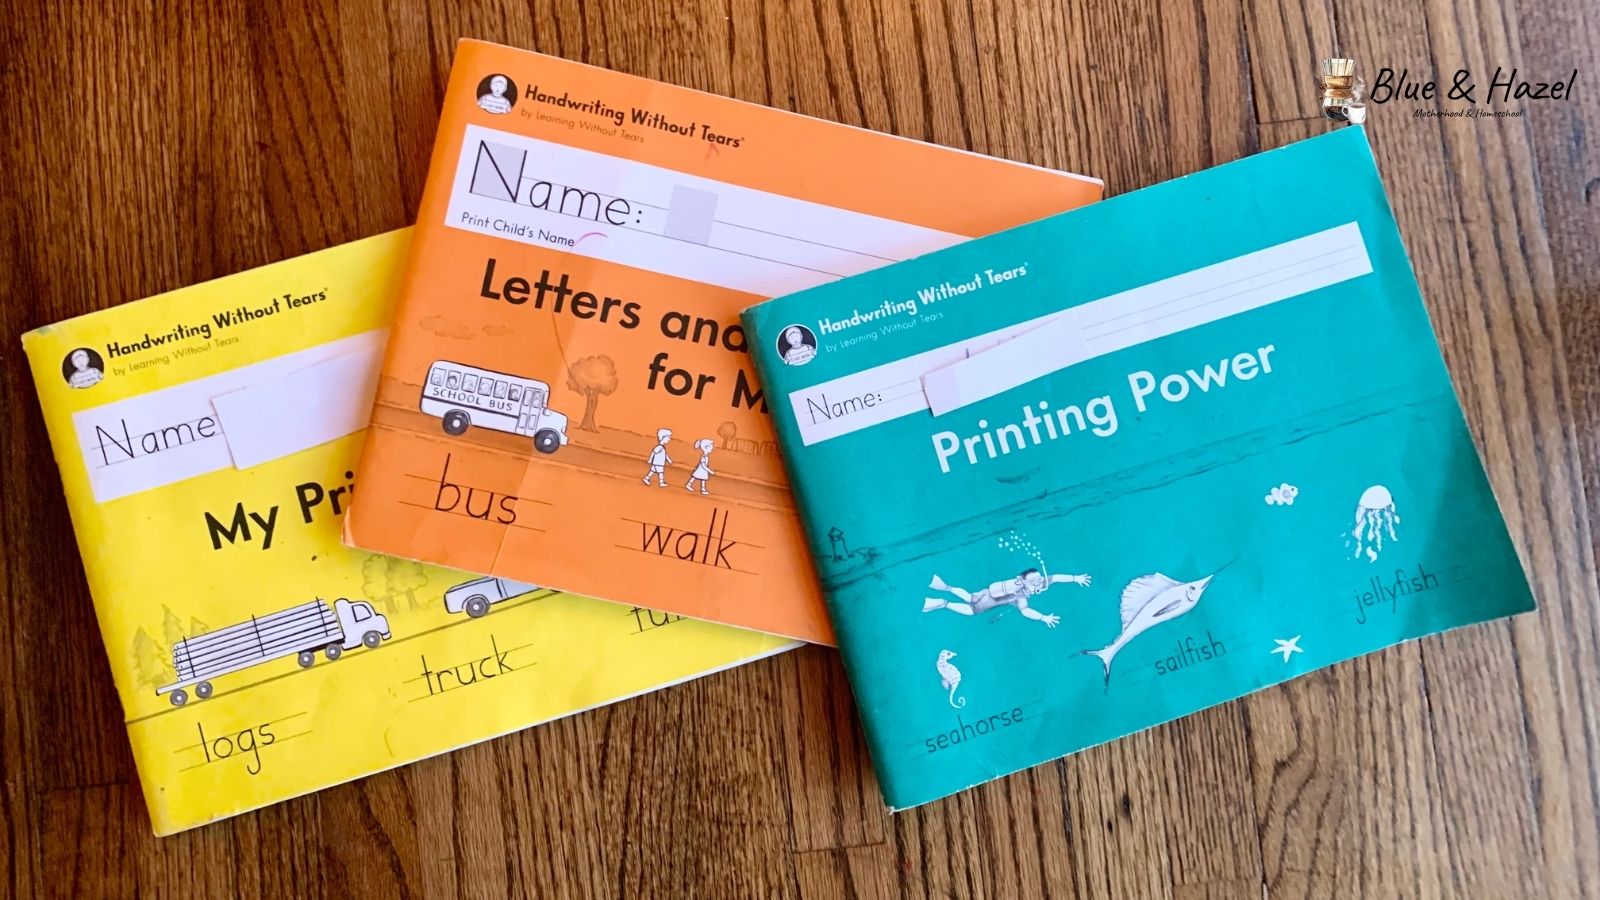 Teacher's Guide - Kindergarten - Handwriting Without Tears Programme